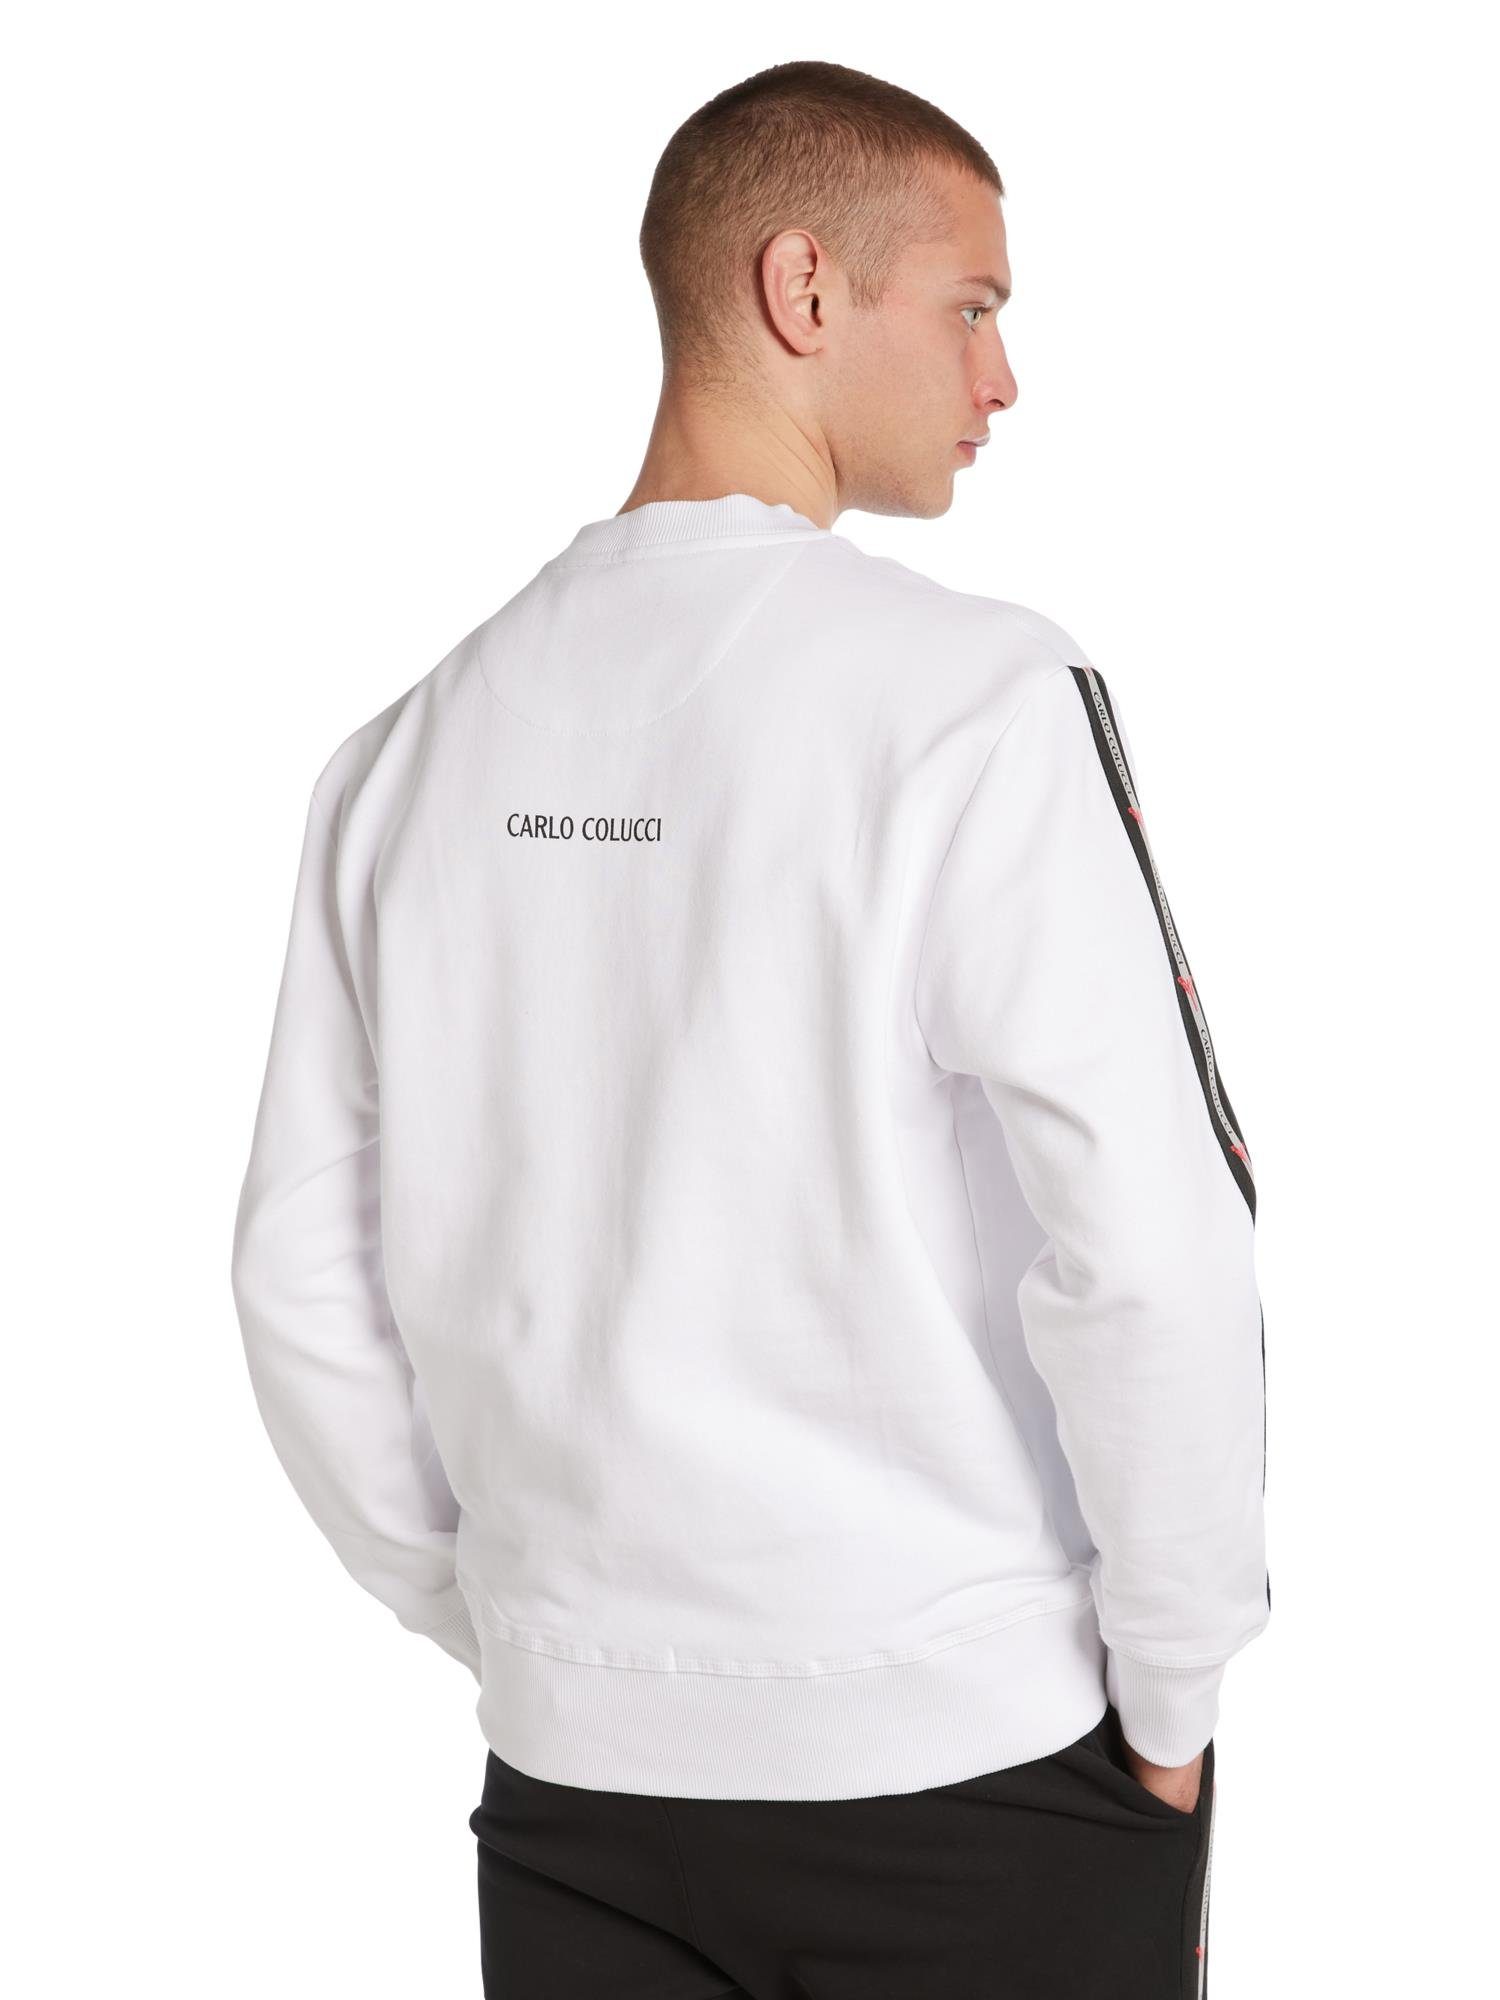 CARLO COLUCCI Sweatshirt D'Adderio Weiß